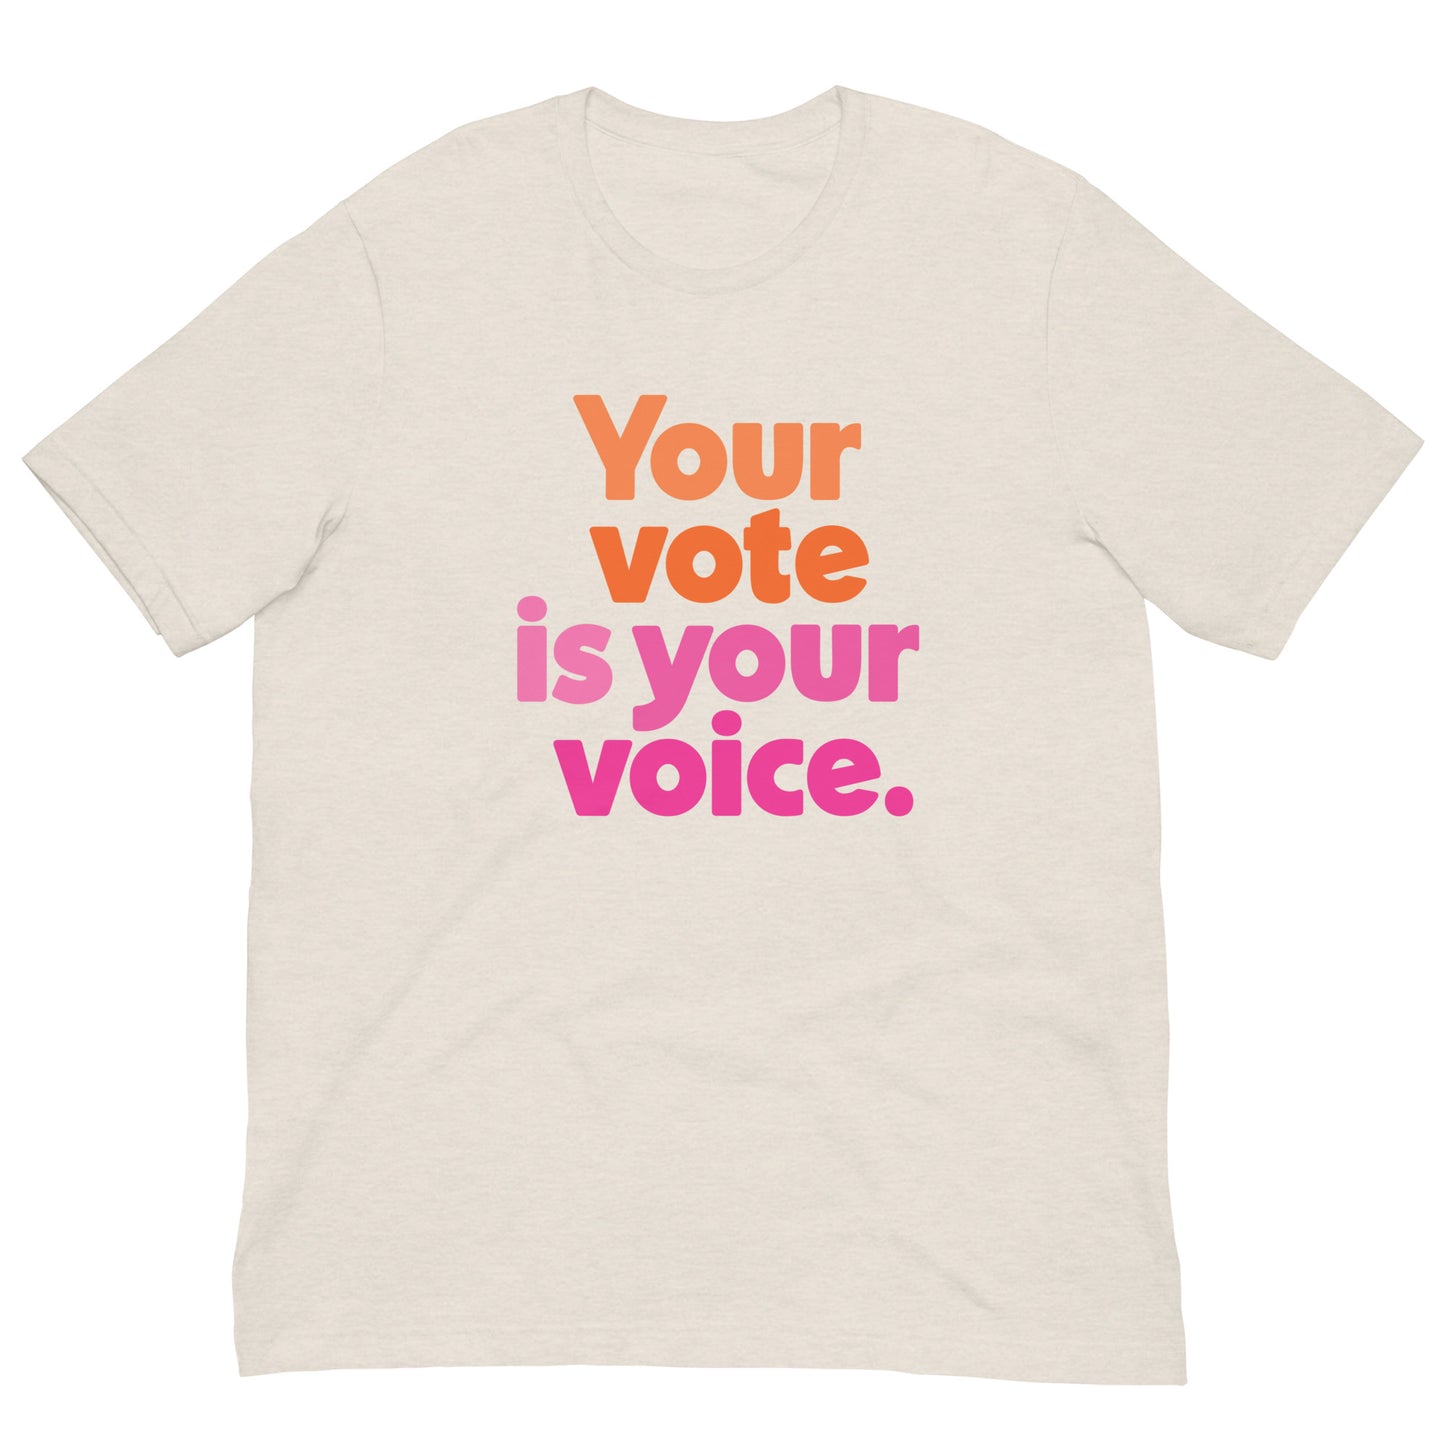 Your vote is your voice - Men’s/Unisex Tee